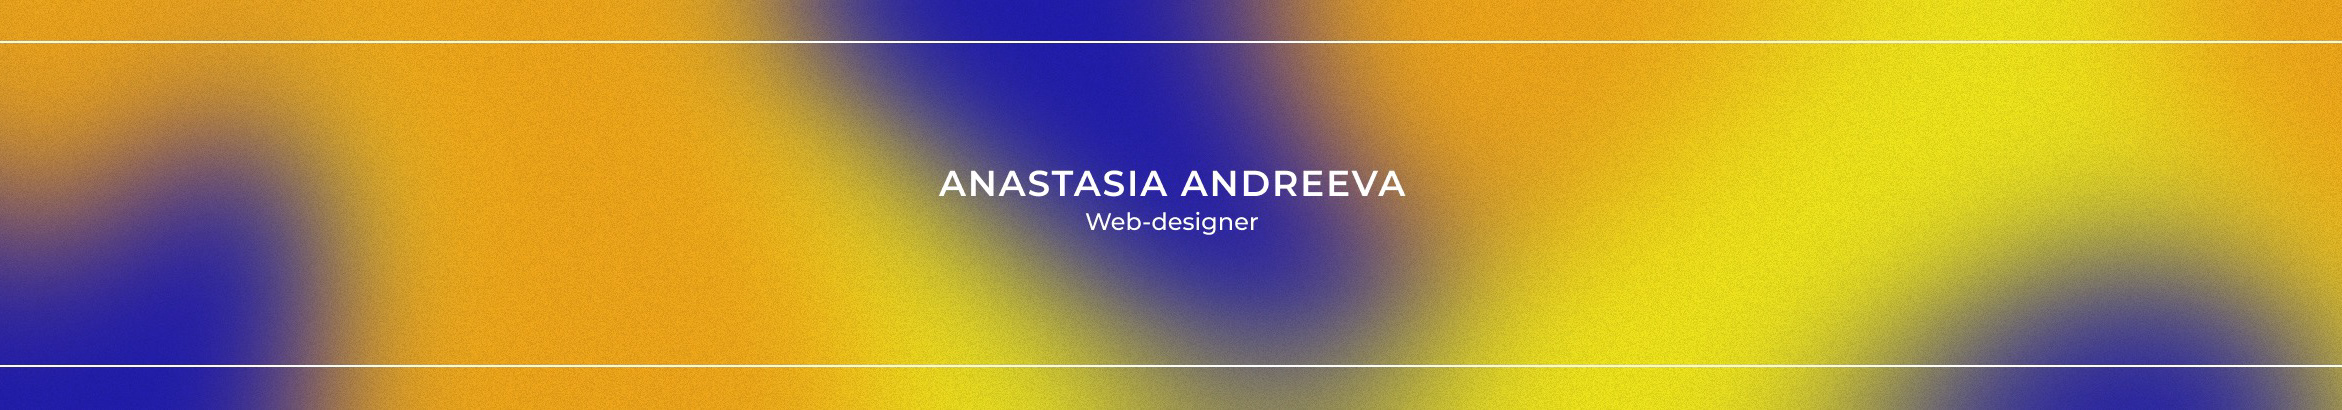 Anastasia Andreevas profilbanner